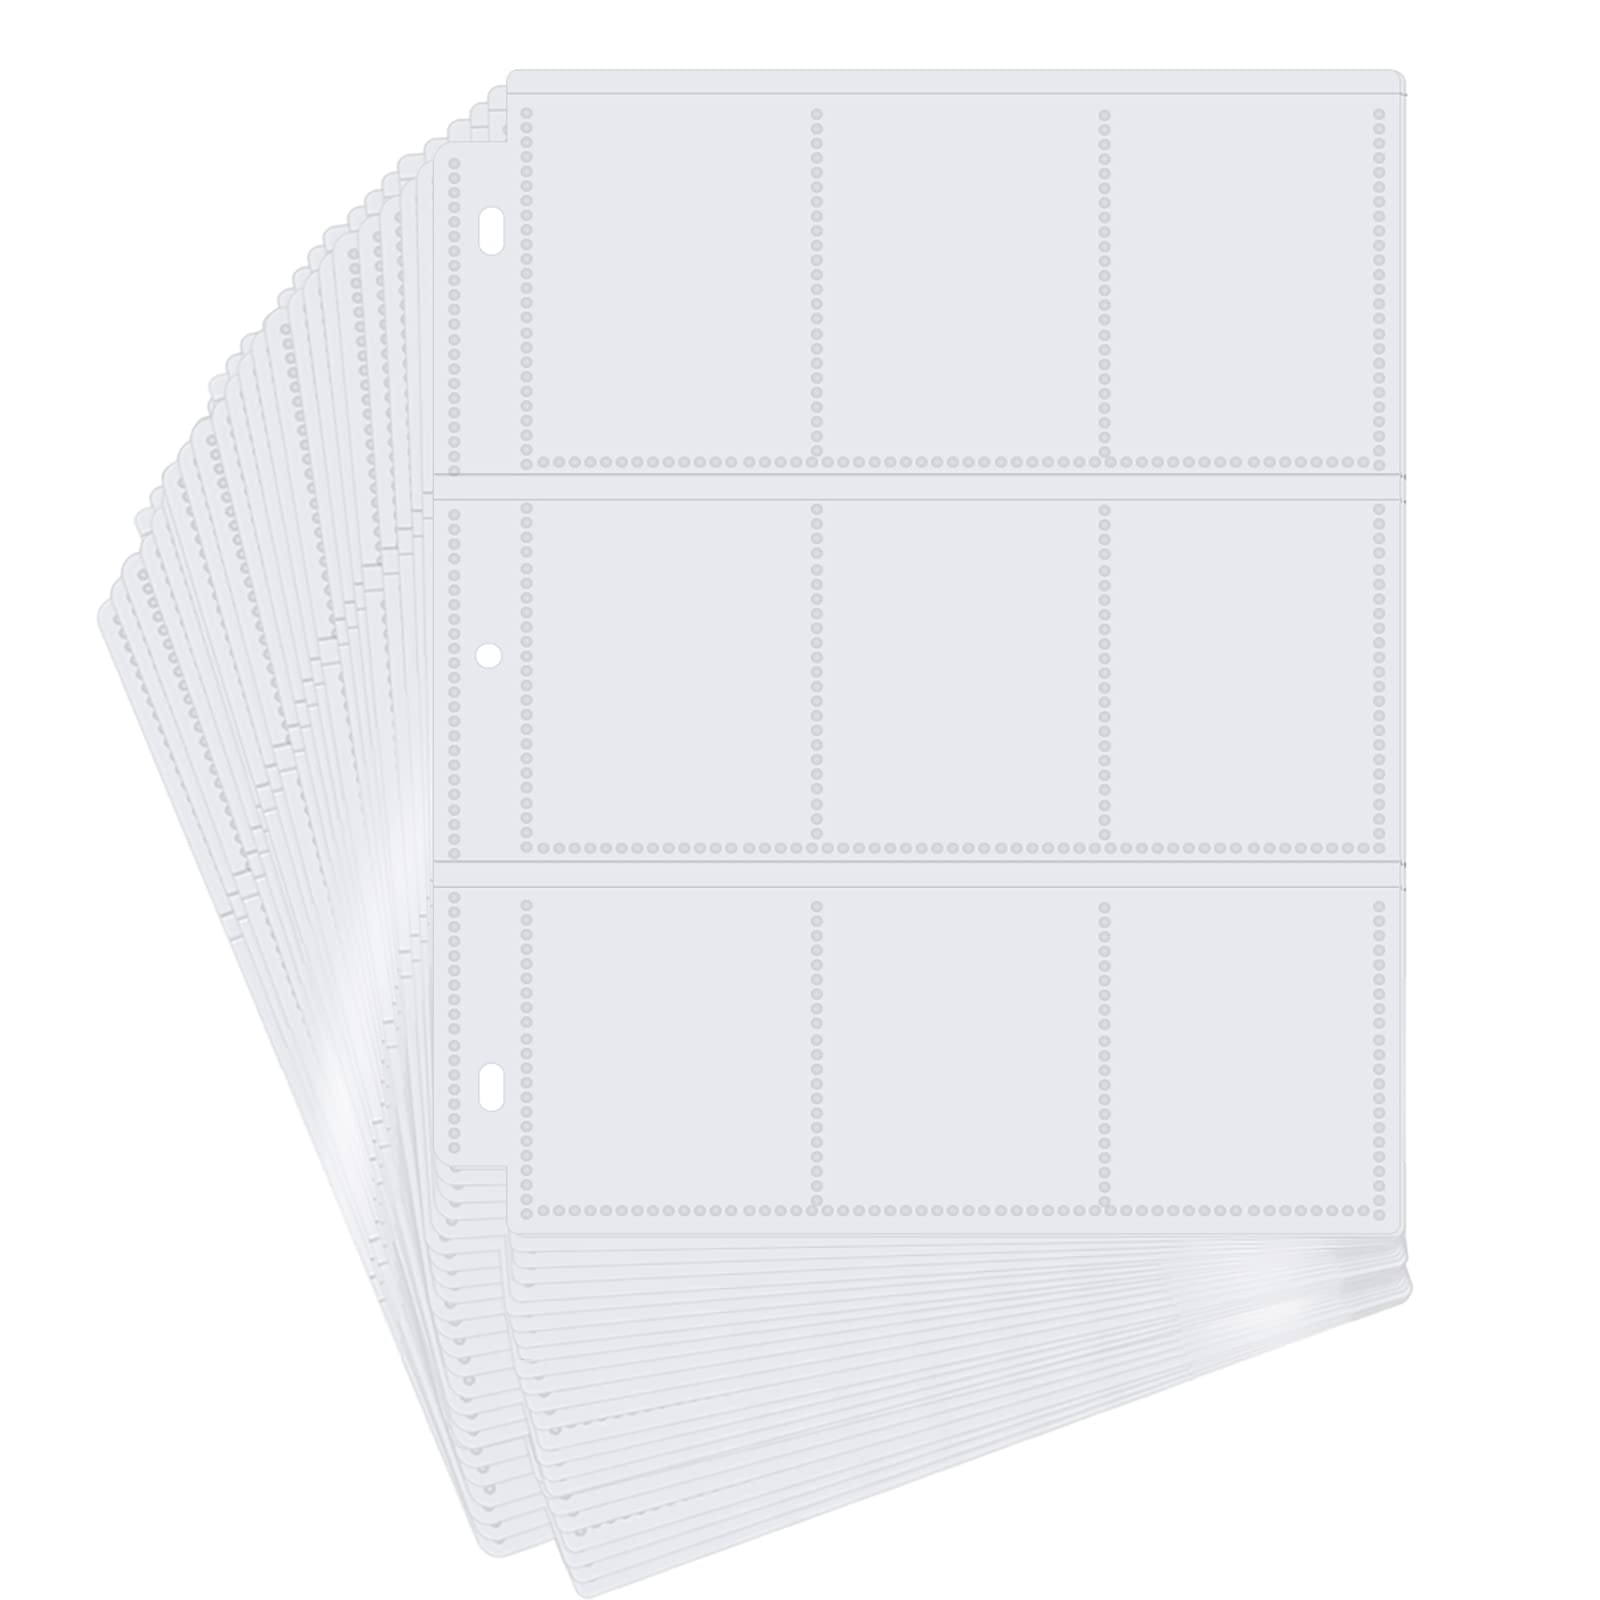 POKONBOY 288 Pockets Trading Card Sleeves, 9-Pocket Trading Card Binder  Sheets Card Storage Album Pages